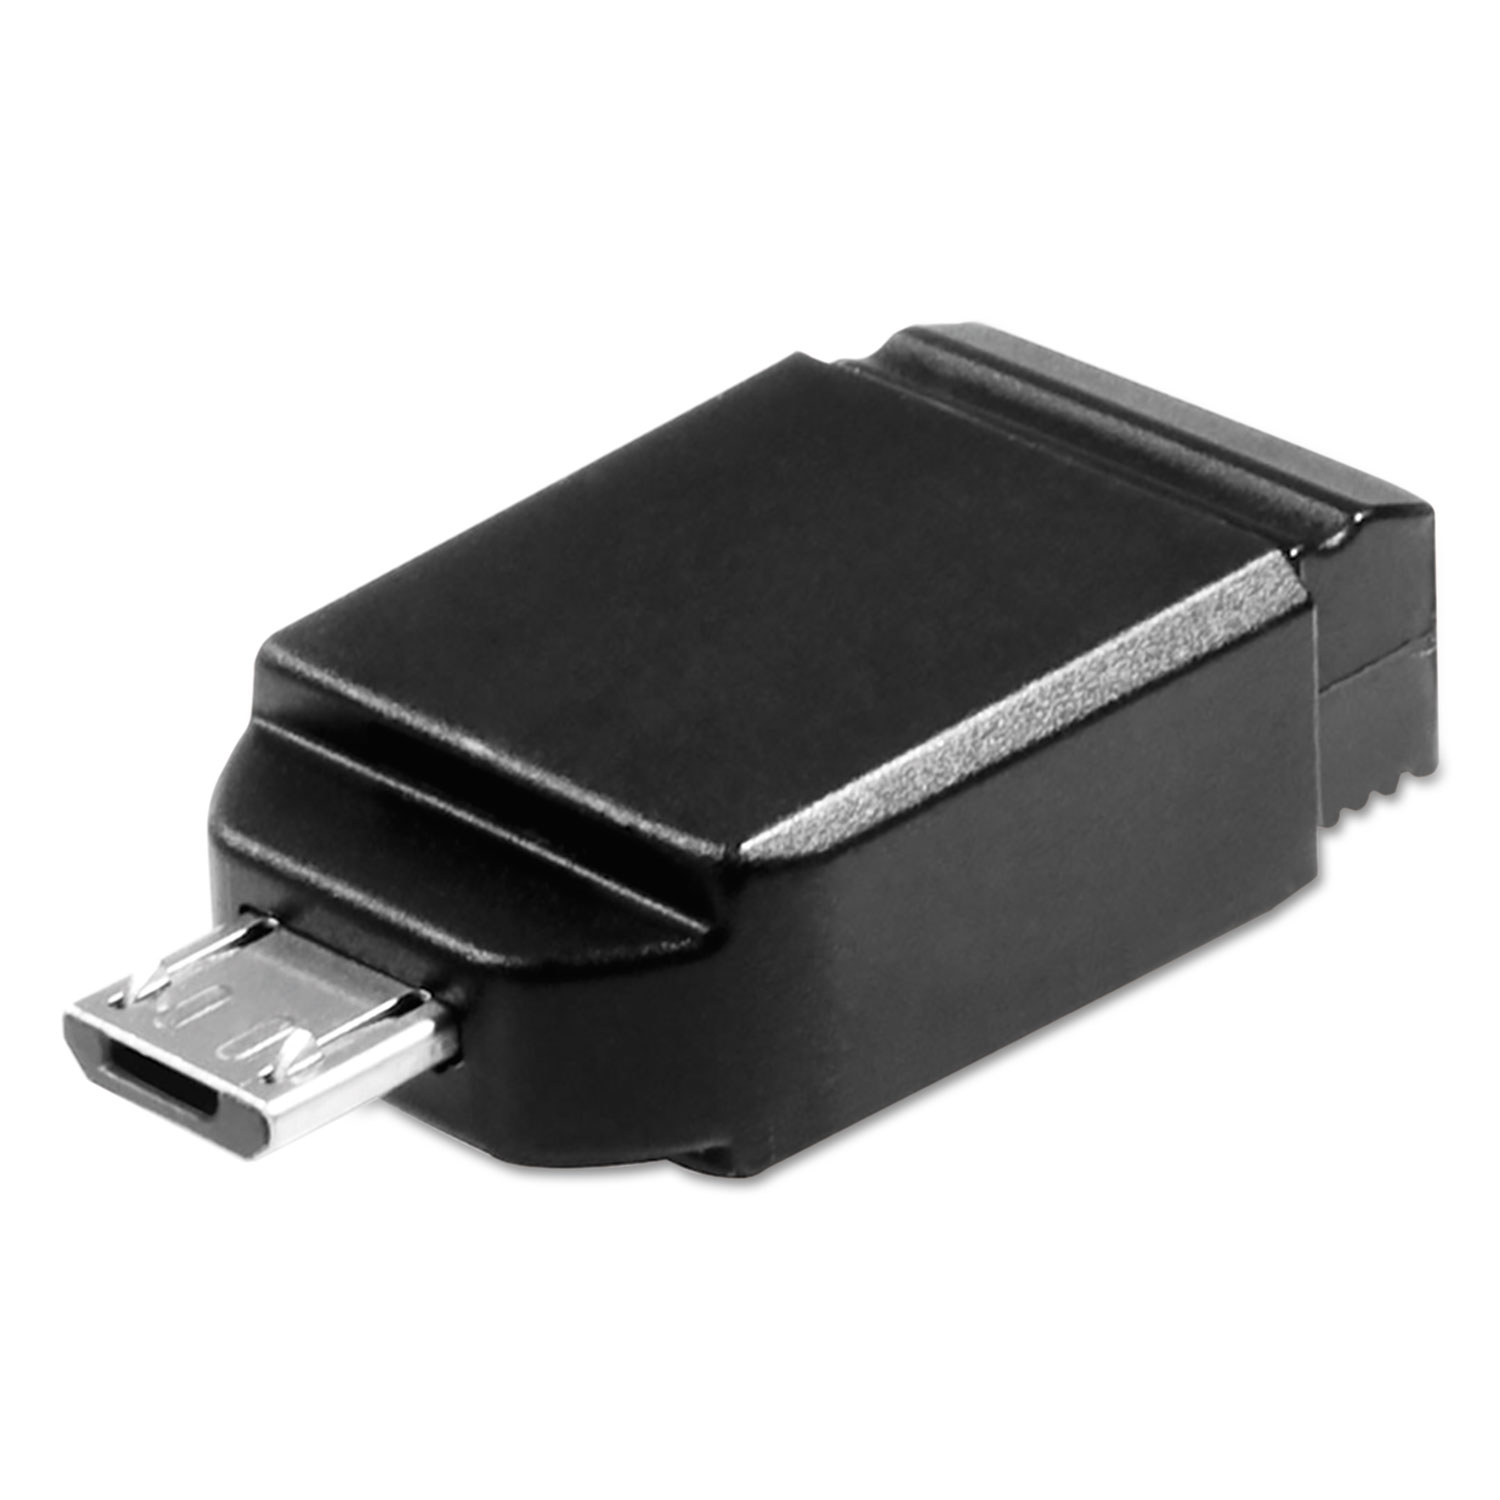 Store n Stay Nano USB Flash Drive with USB OTG Micro Adapter, 16GB, Black